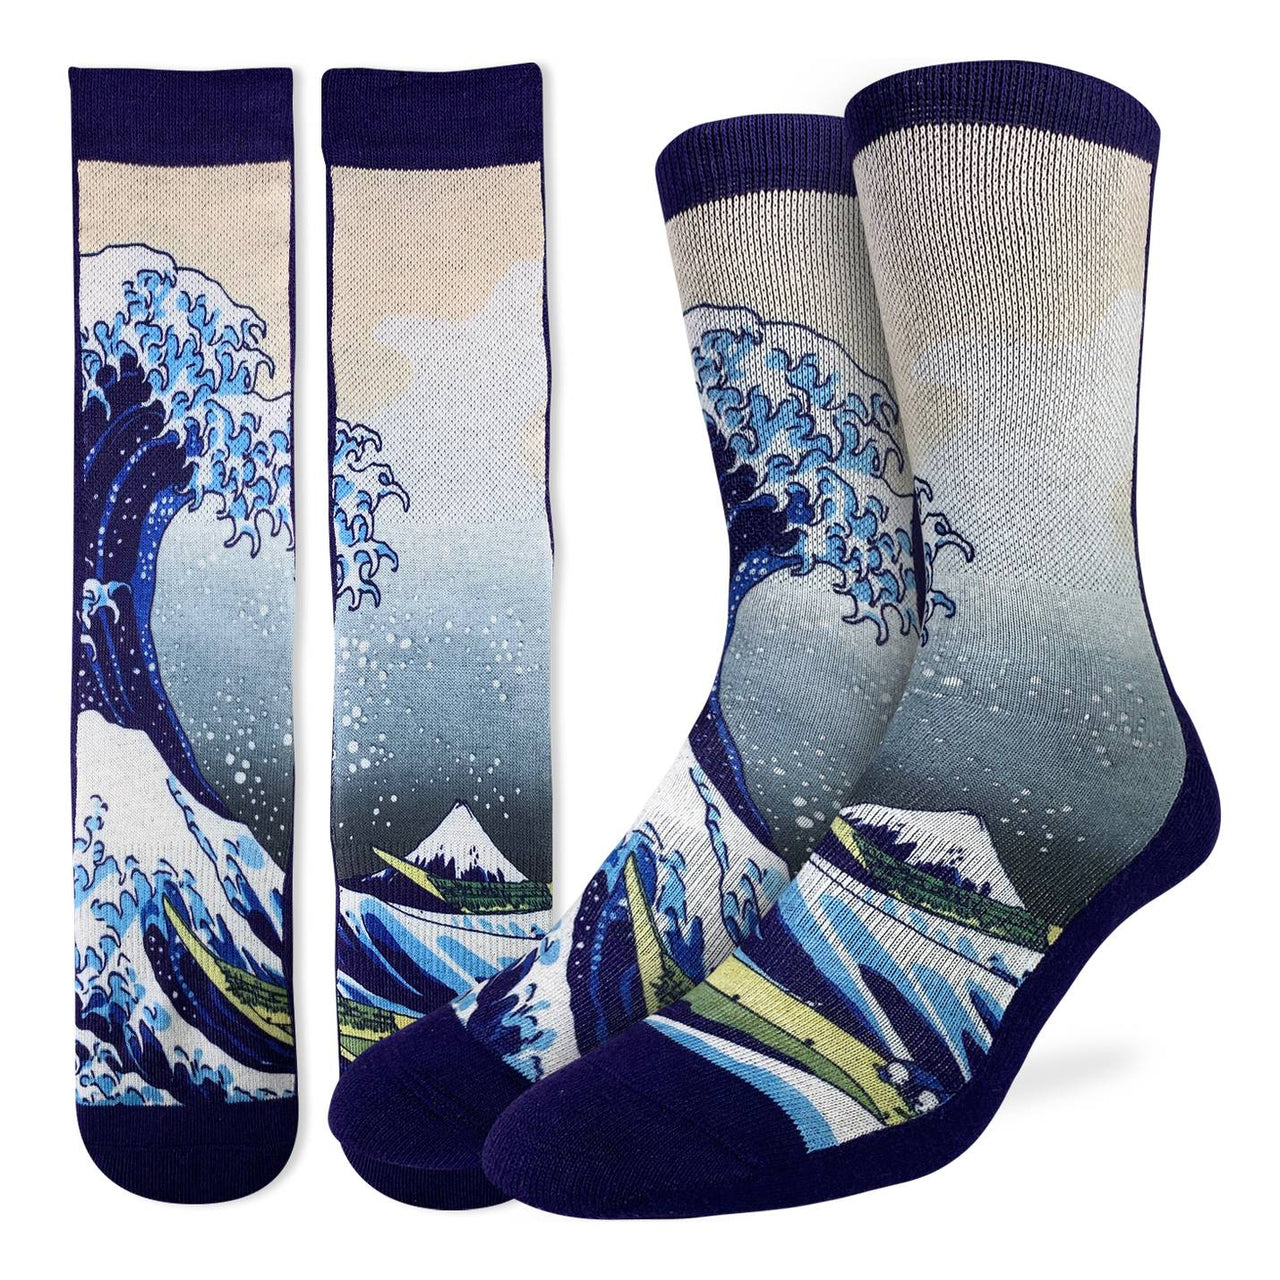 Men's Socks - Great Wave off Kanagawa